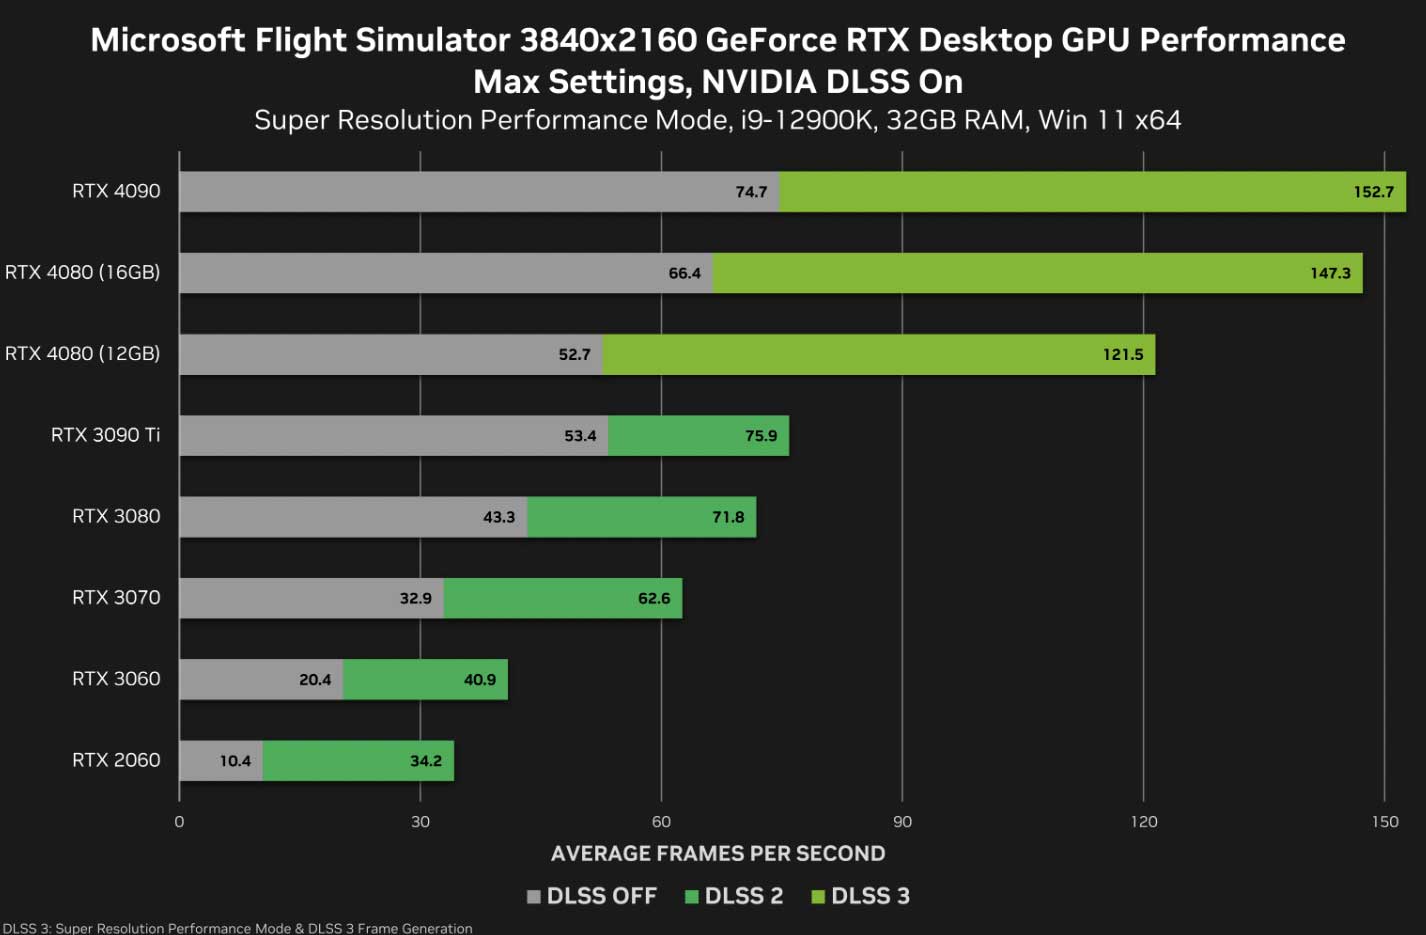 RTX 4080 12GB model canceled by NVIDIA